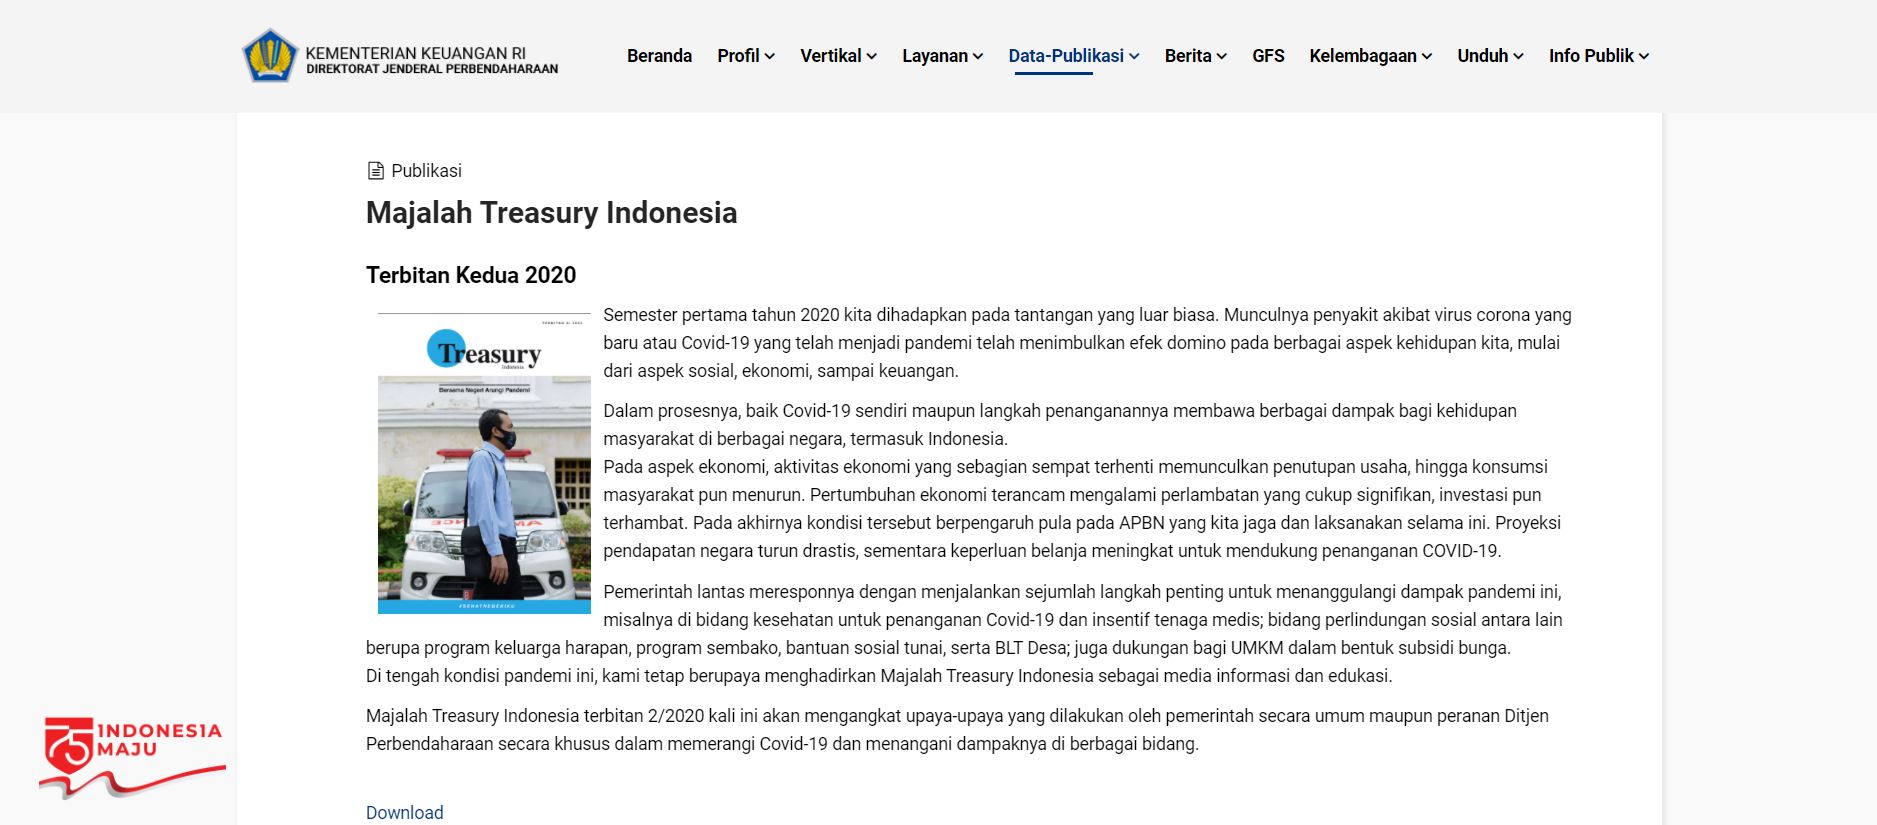 Majalah Treasury Indonesia terbitan 2 2020